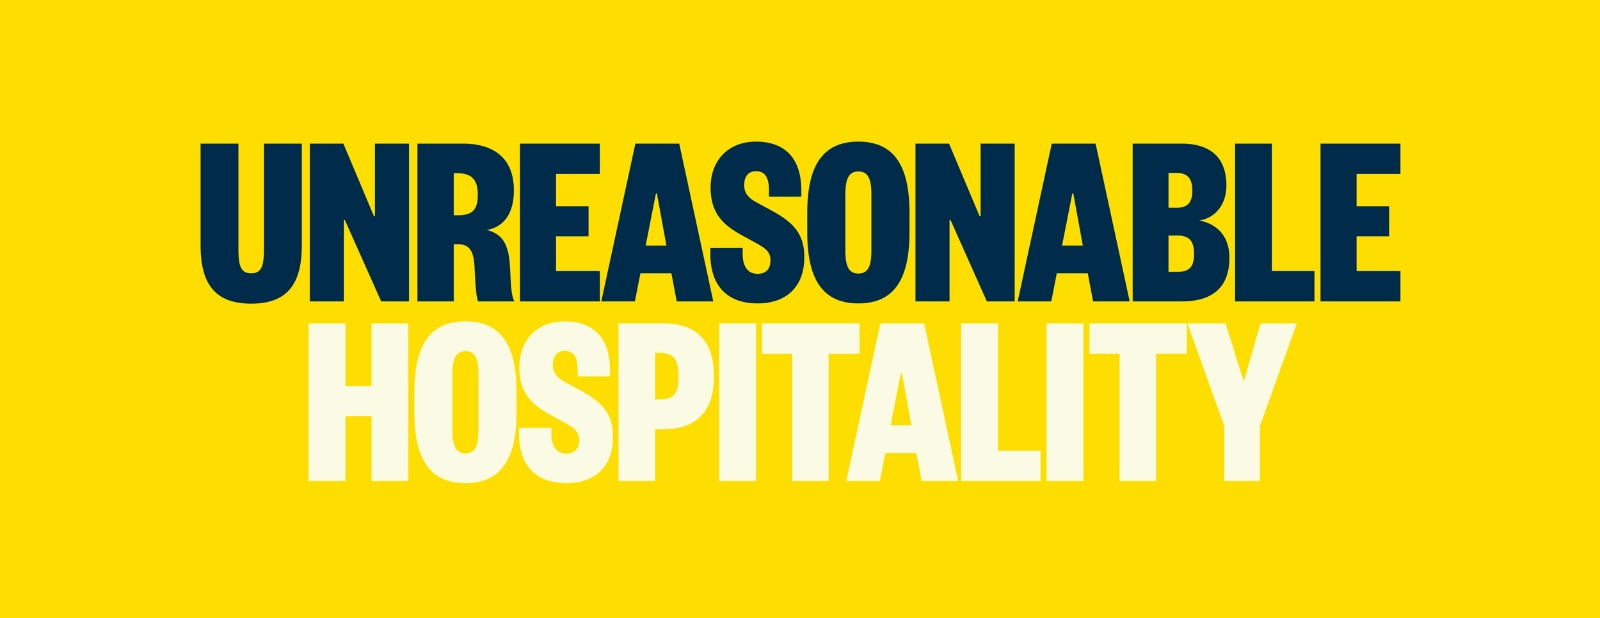 the logo for unreasonable hospitality